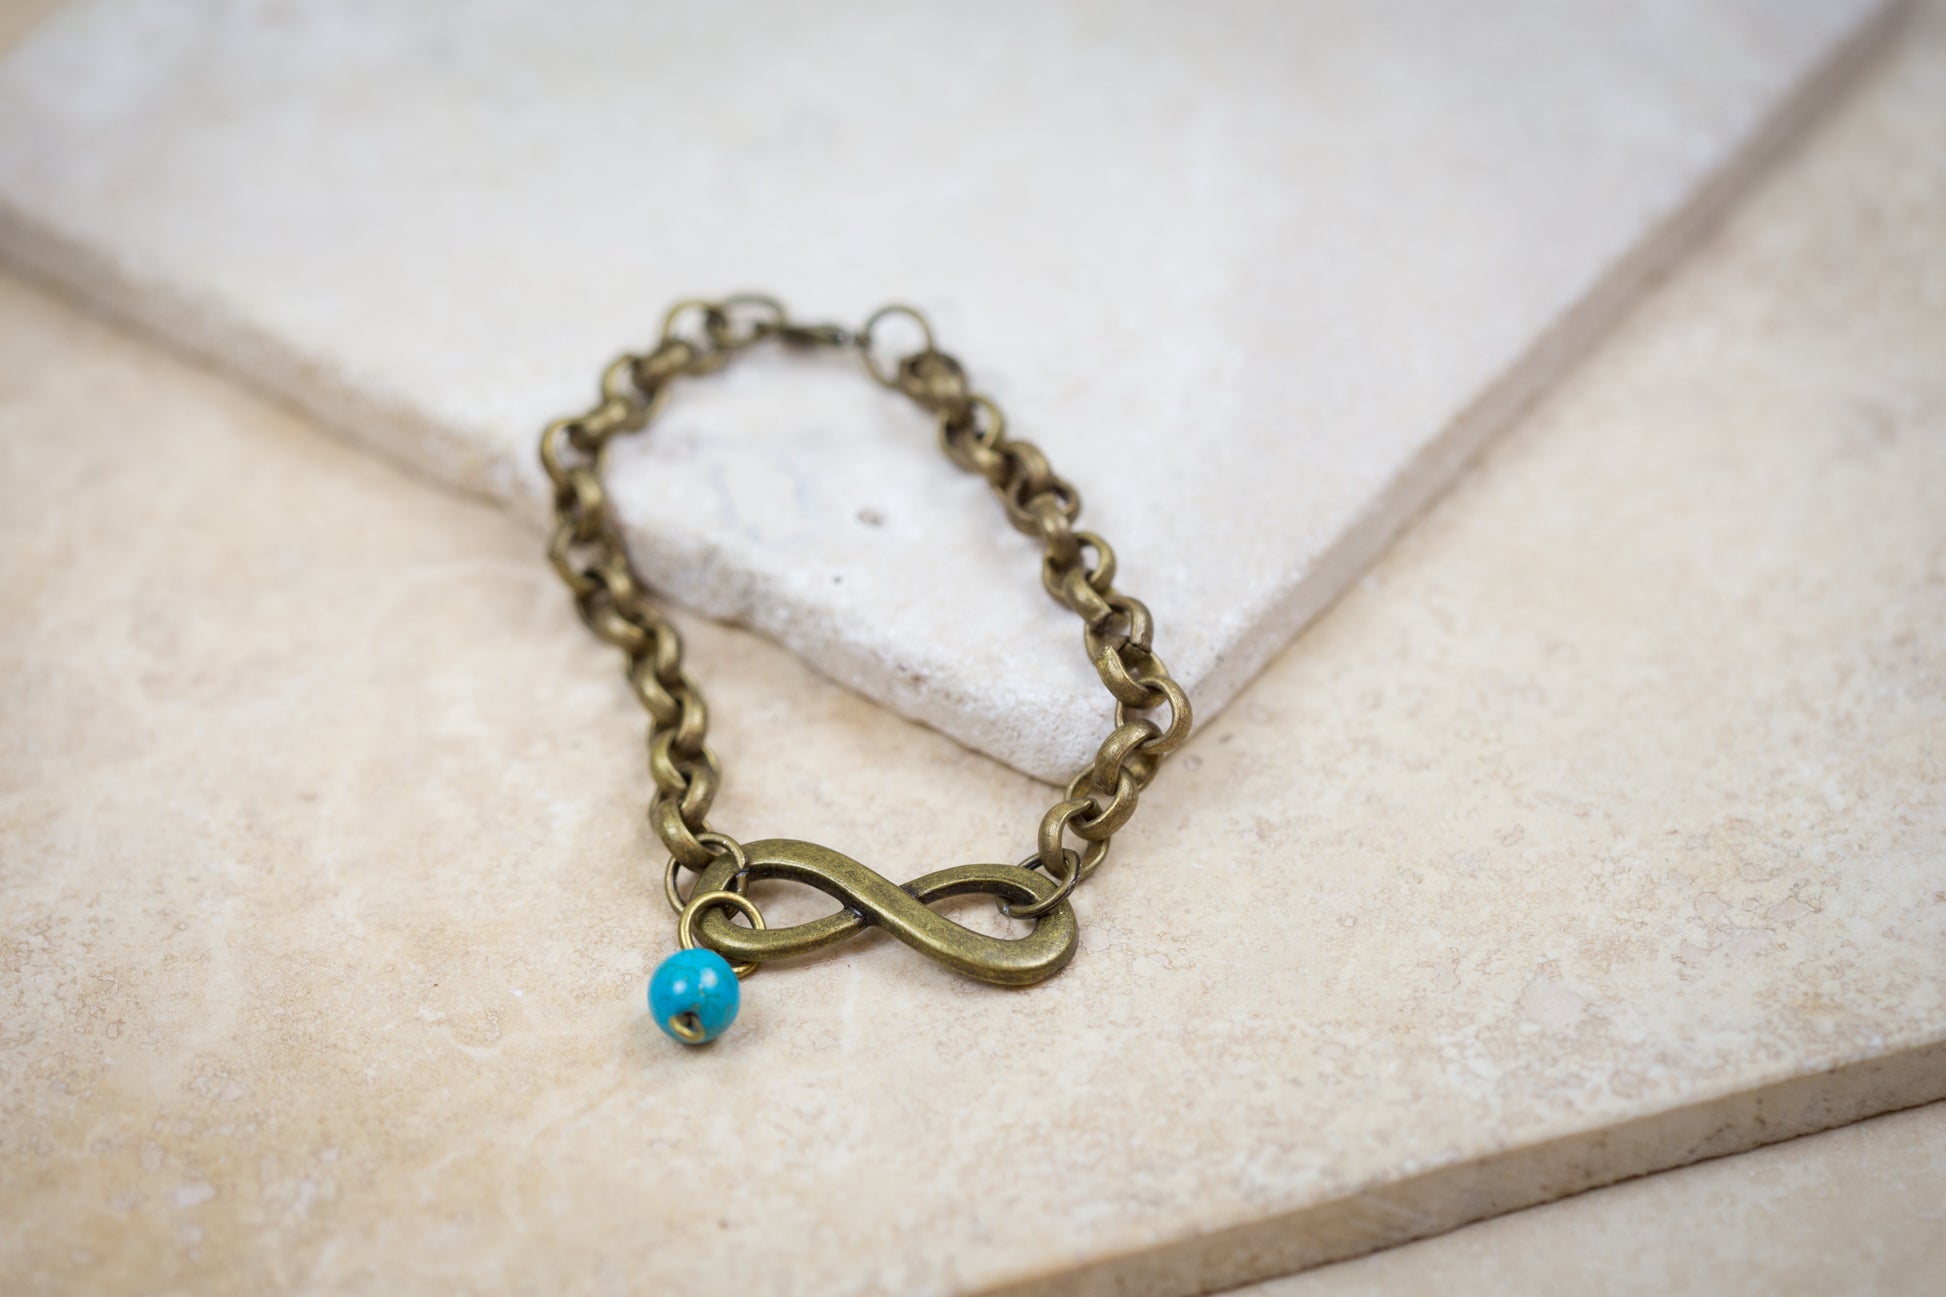 Handmade Bronze Infinity Bracelet with Turquoise Sky Bead